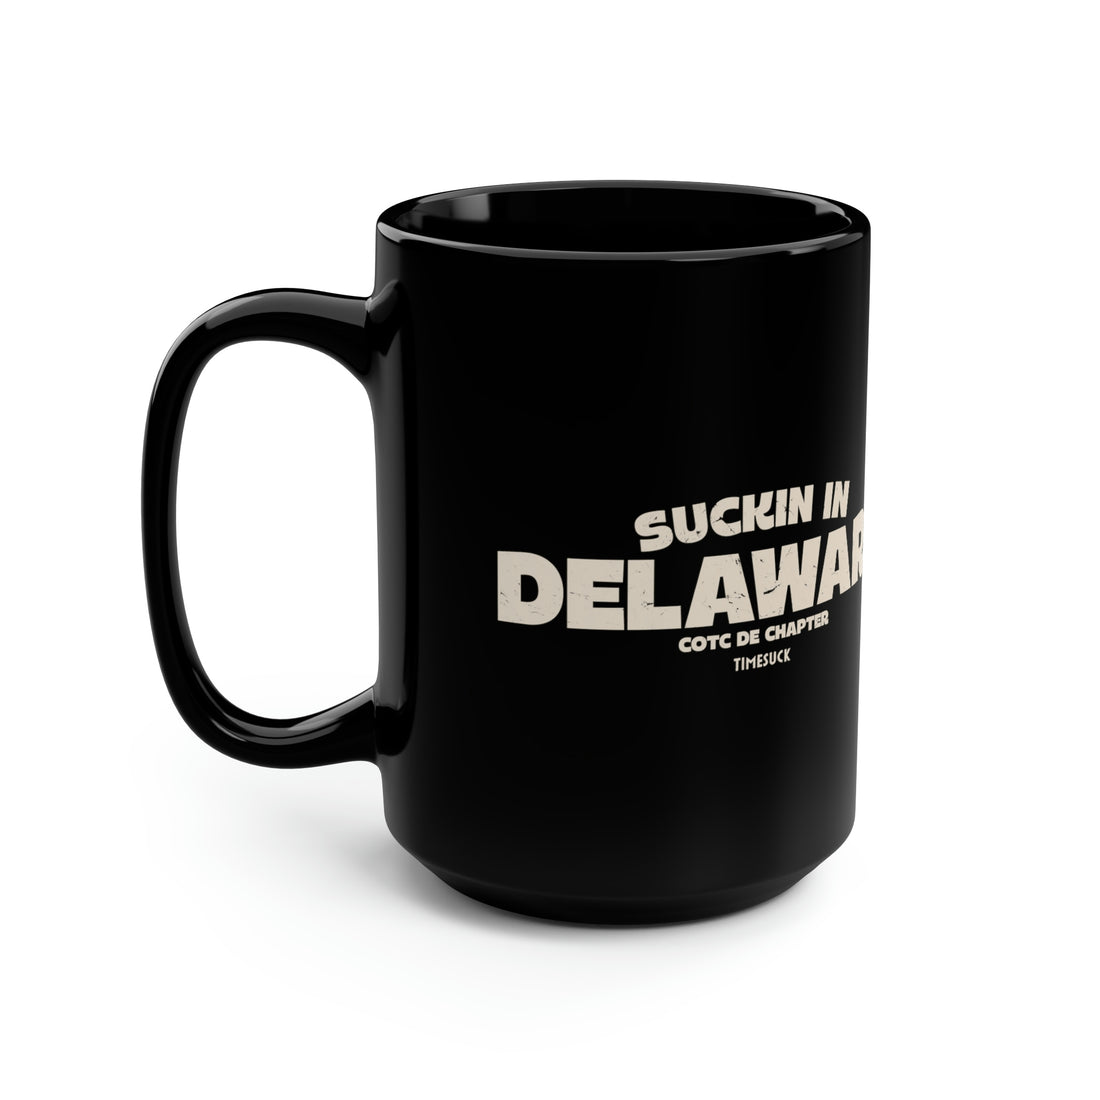 Delaware Cult Mug